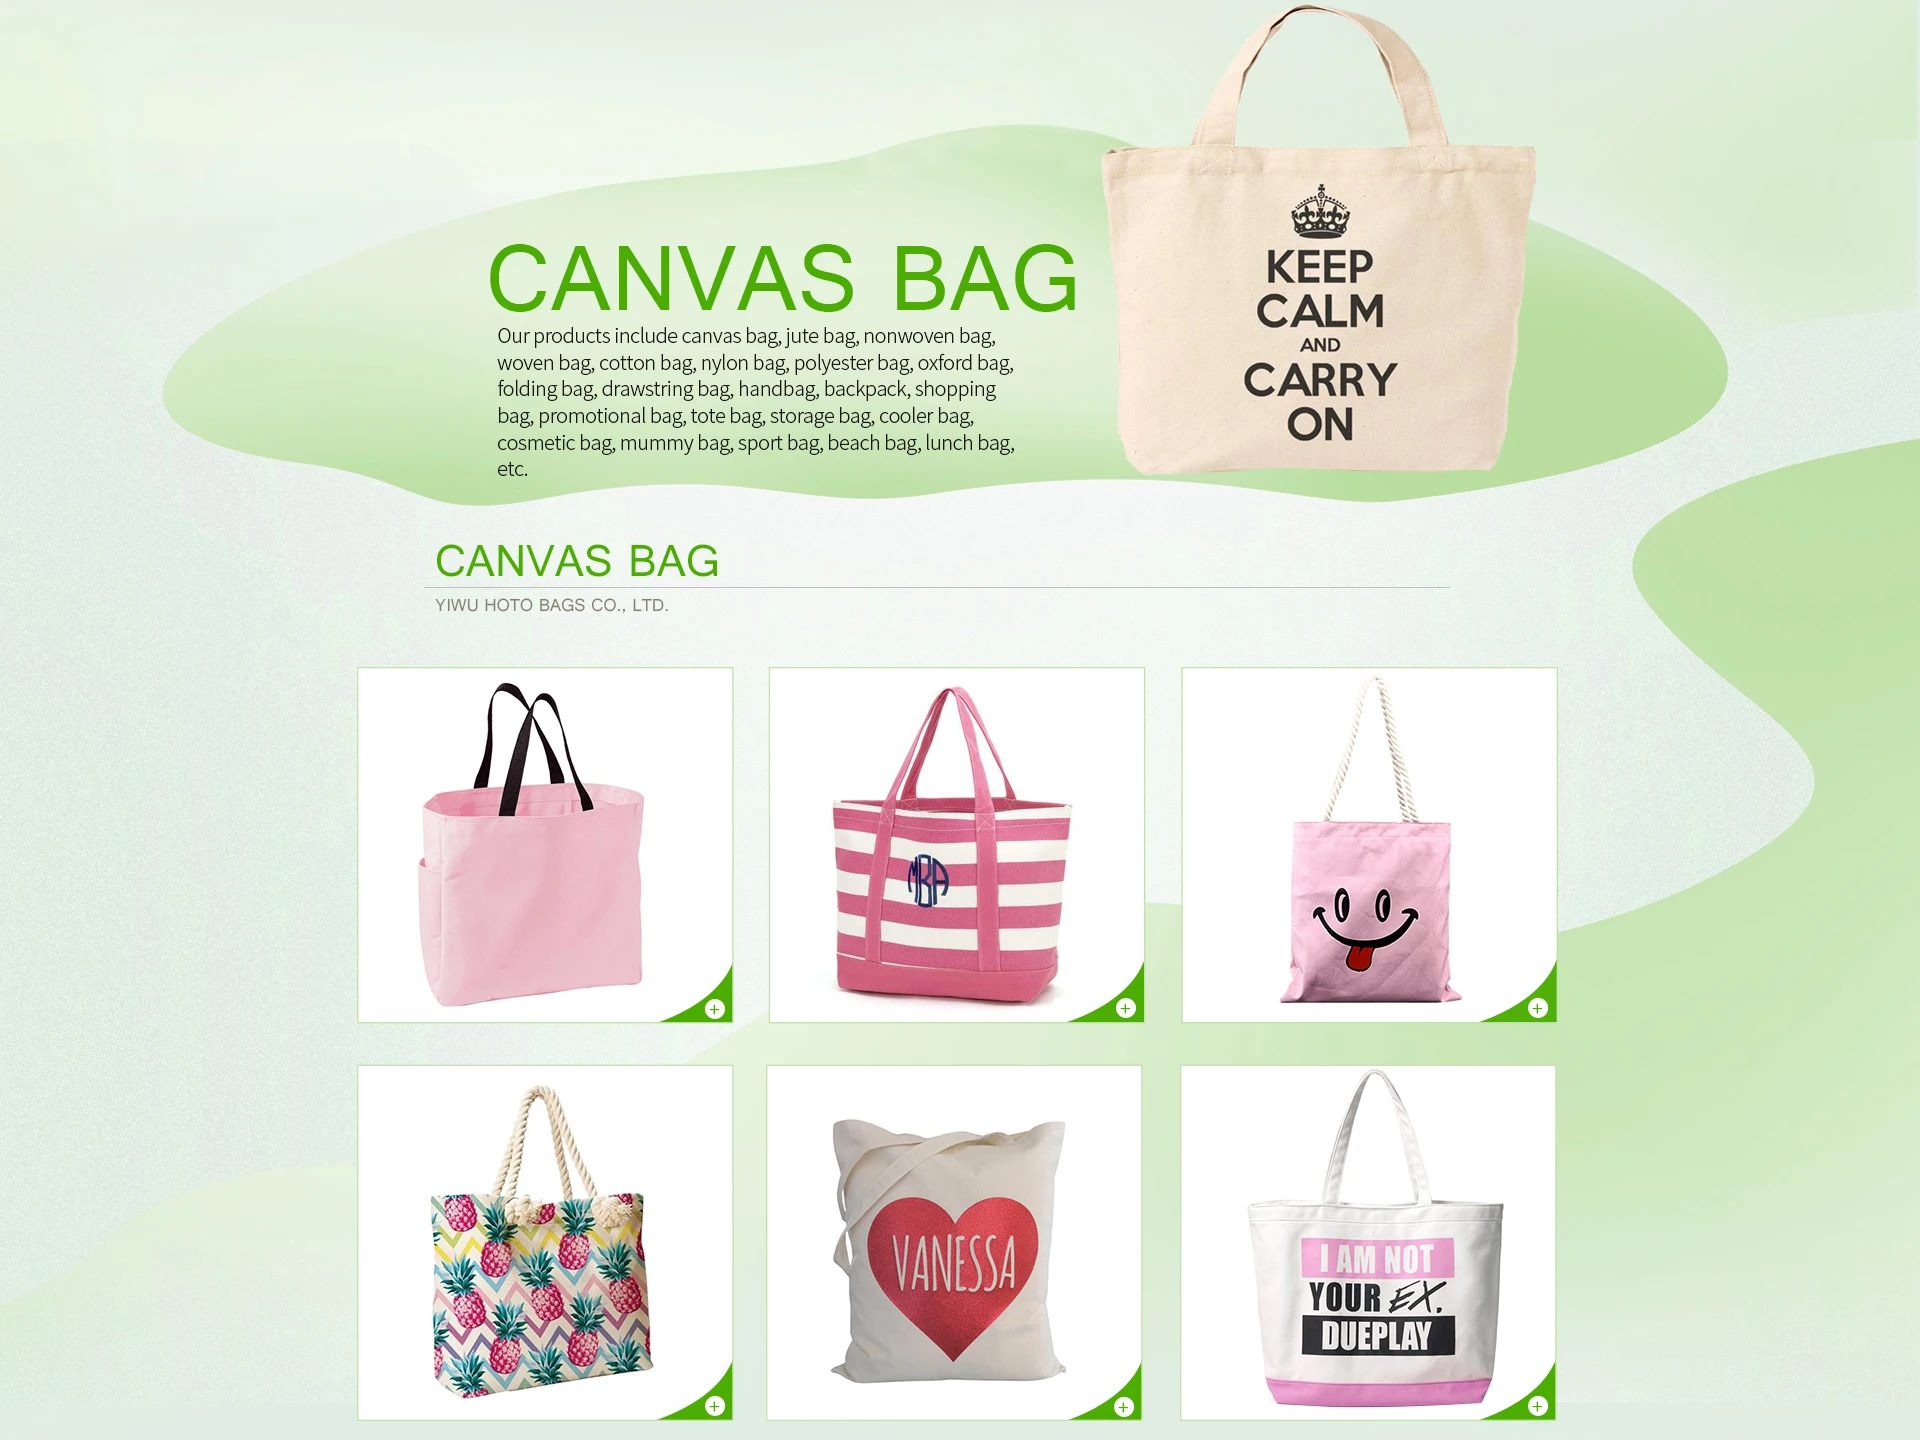 Yiwu Hongtuo Bags Co., Ltd. - Canvas Bag, Jute Bag